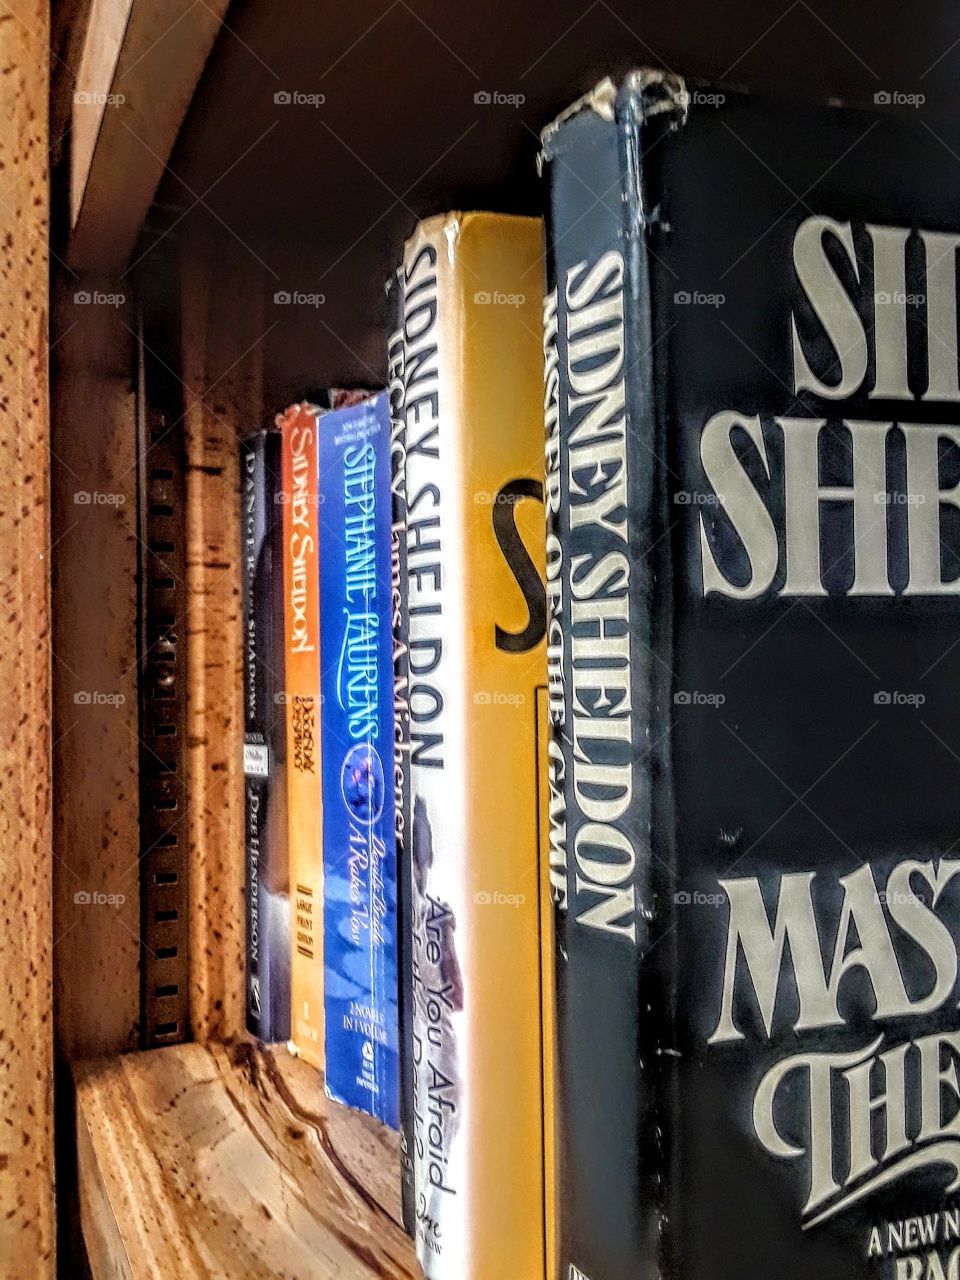 books on library shelf